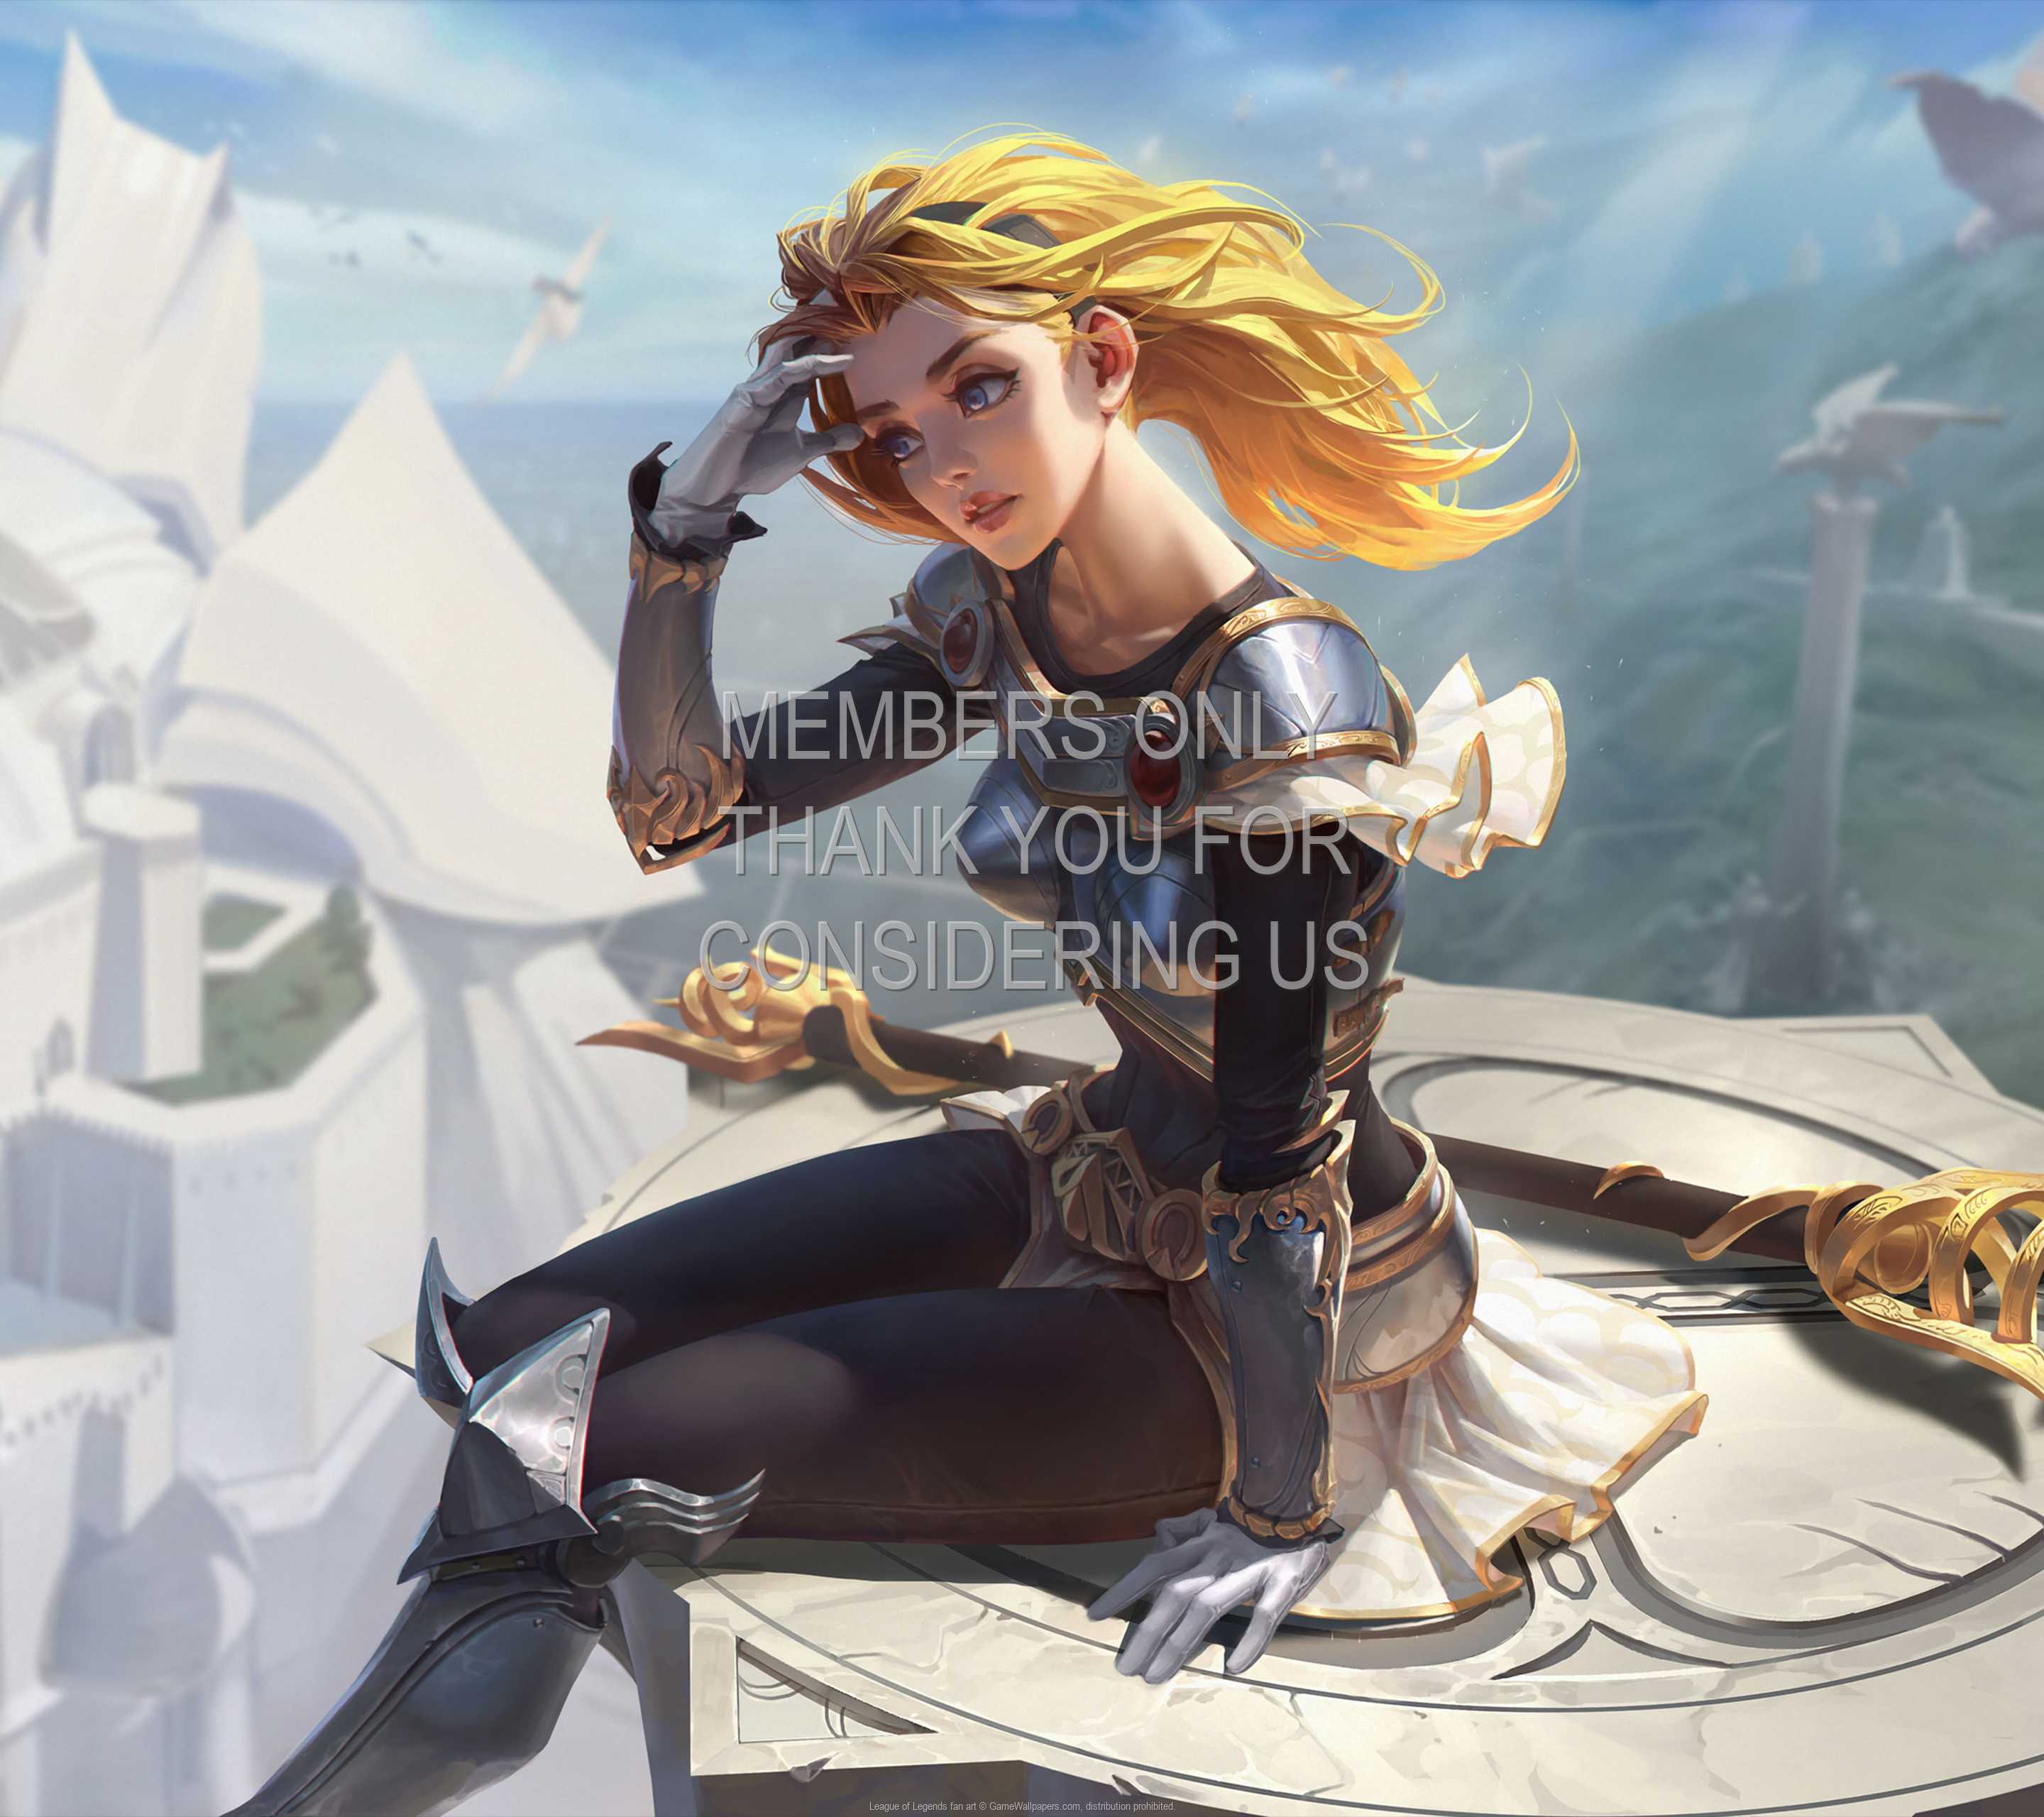 League of Legends fan art 1440p Horizontal Mobile wallpaper or background 24